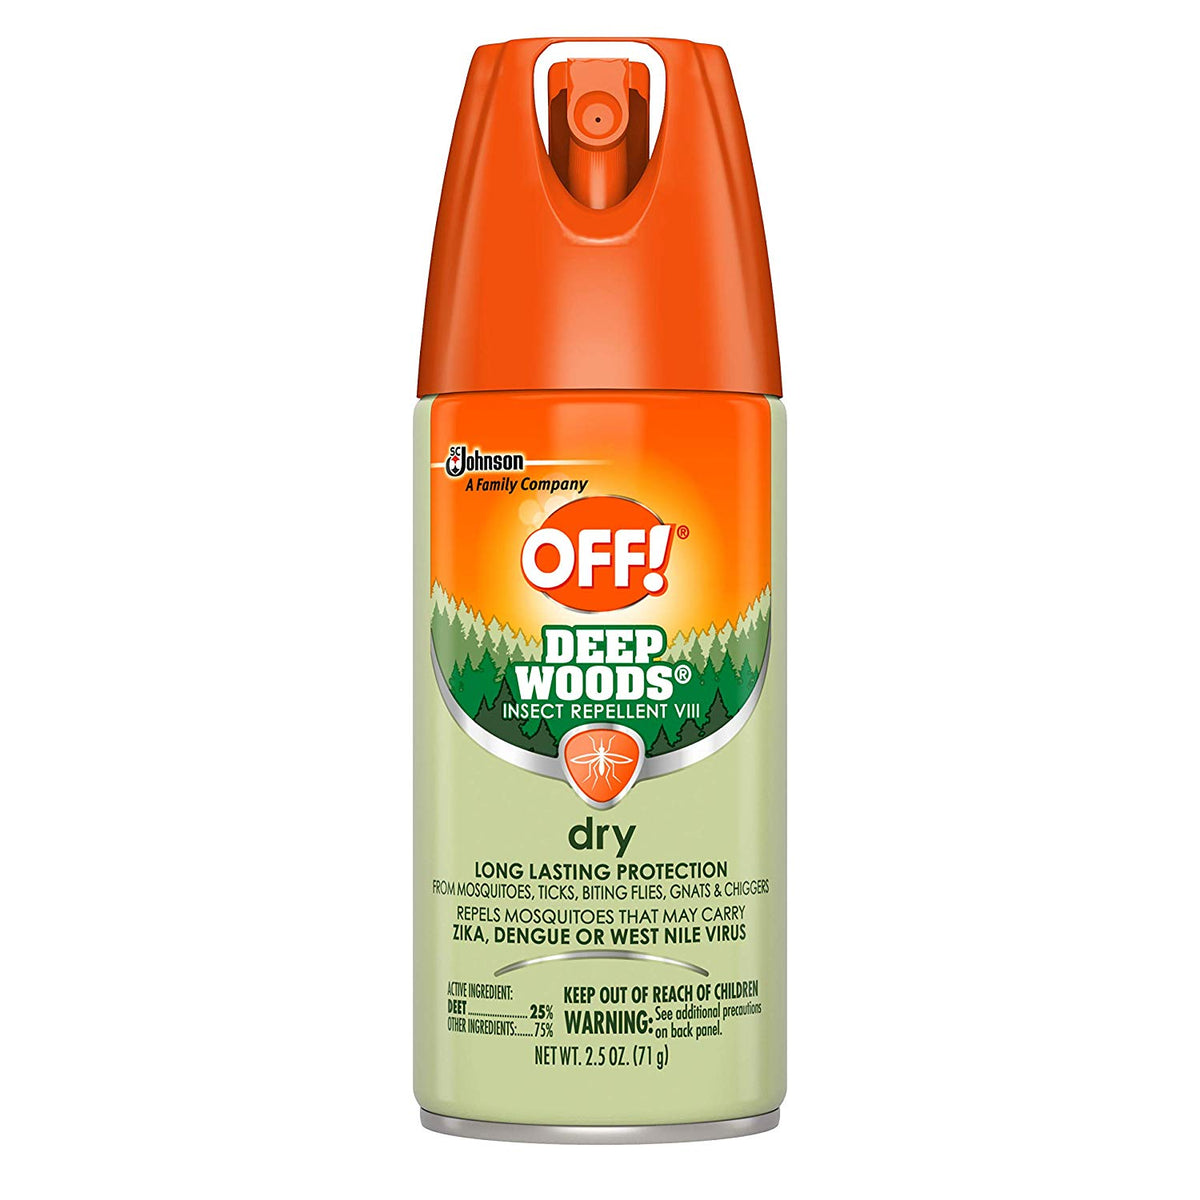 OFF! 73175 Deep Woods Insect Repellent VIII Dry Aerosol, 2.5 Oz